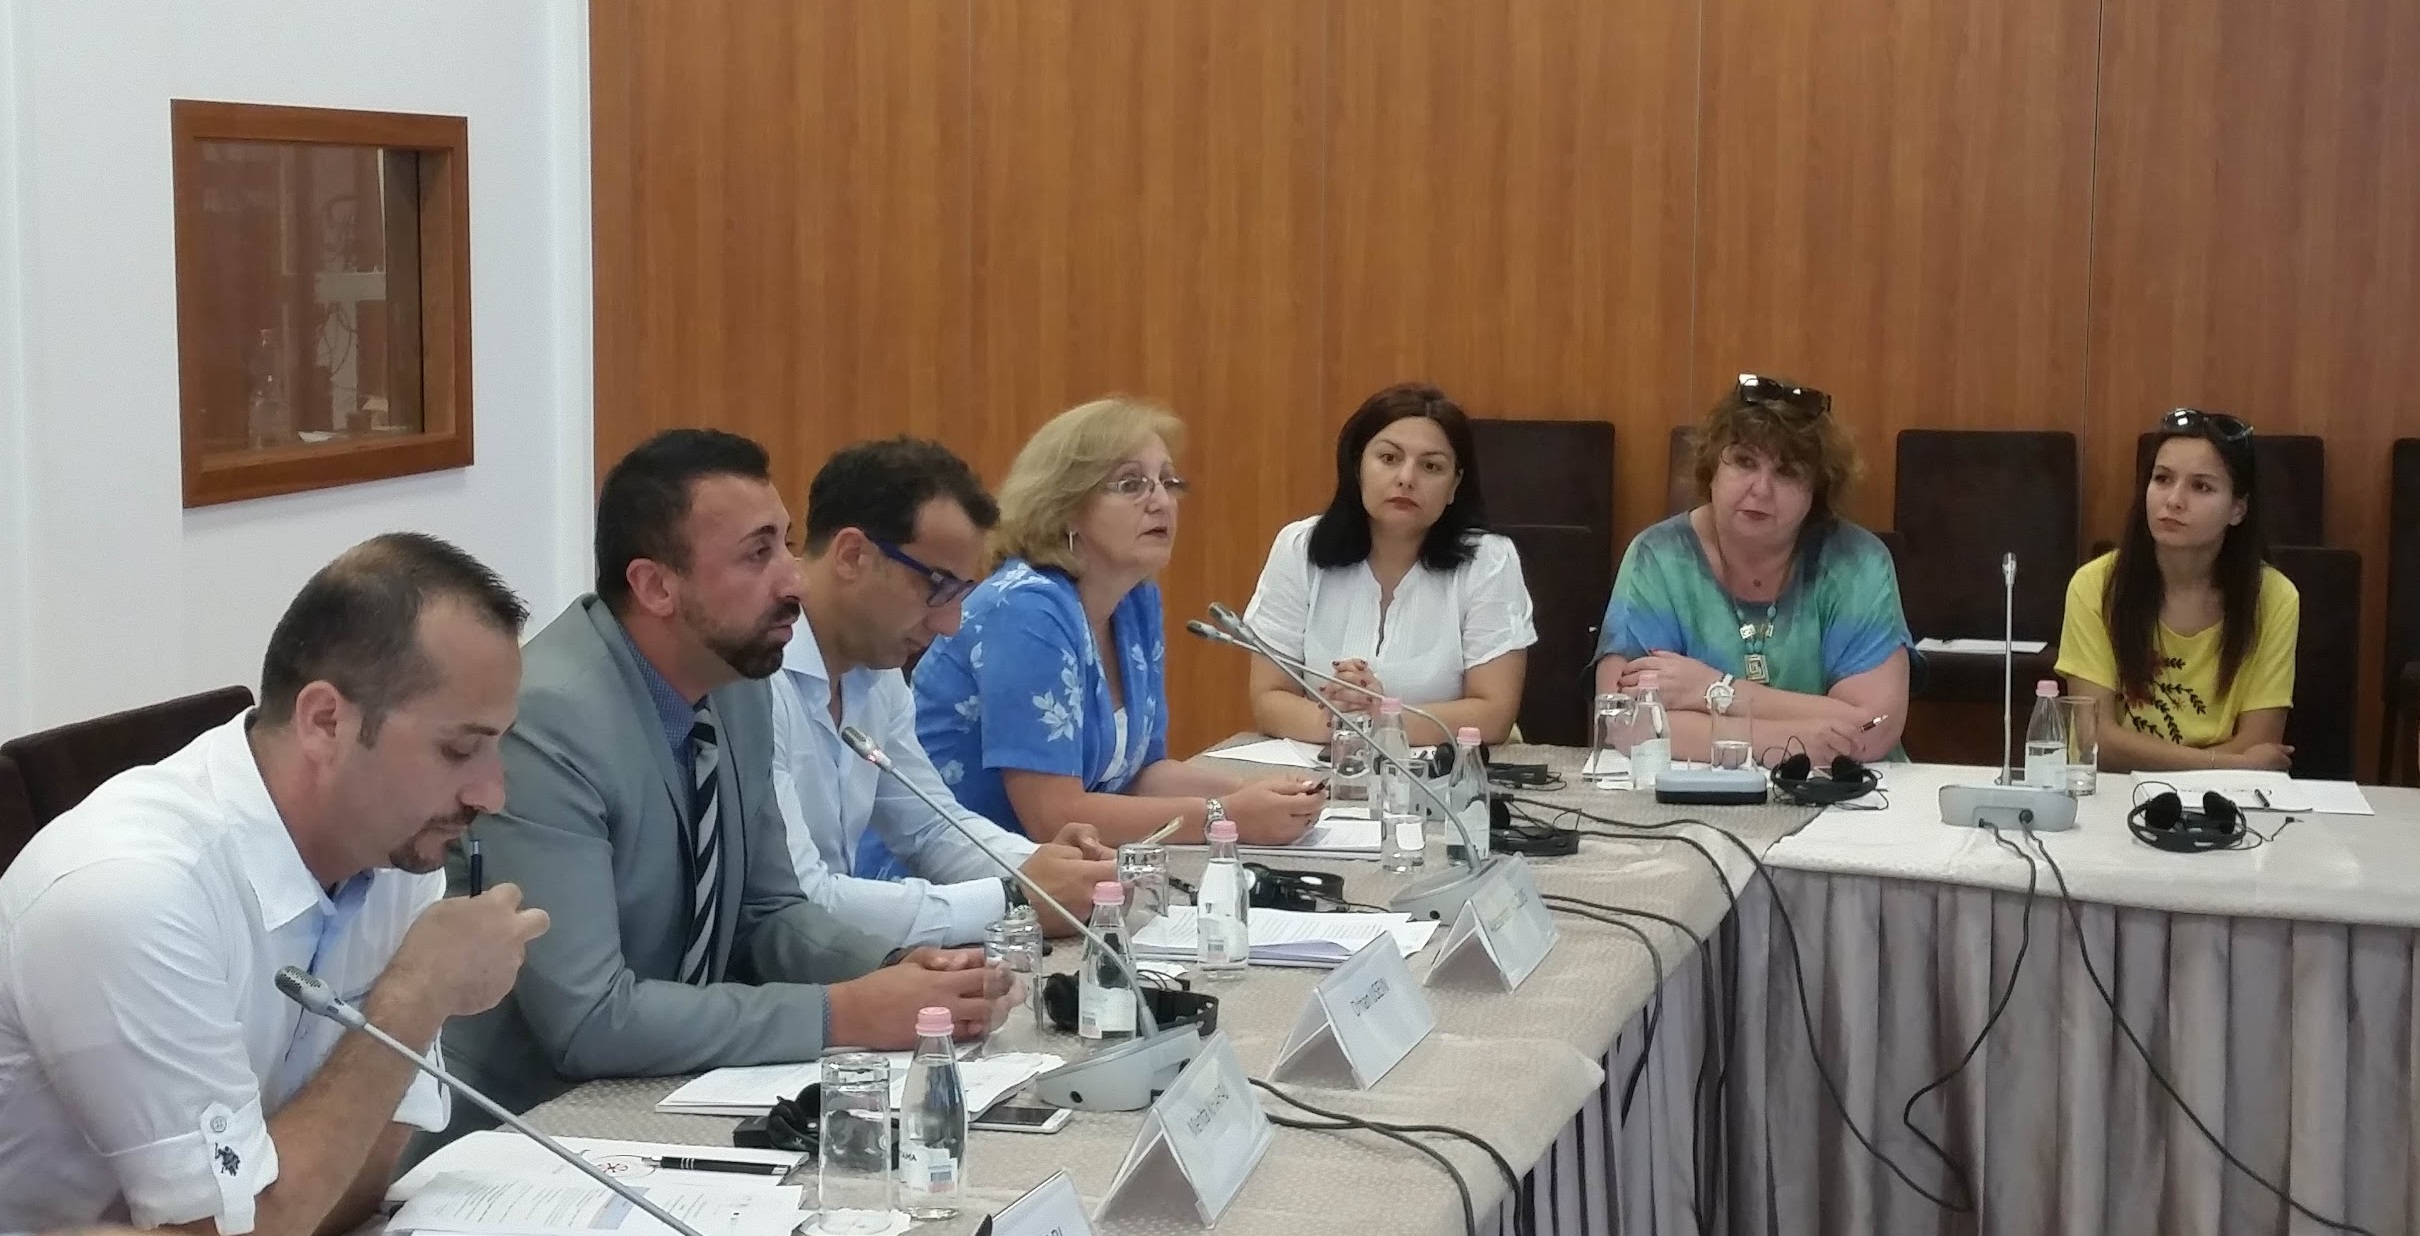 National Platform Meeting on Roma Integration in Albania on 11 June 2018 (Photo: RCC/Milica Grahovac)